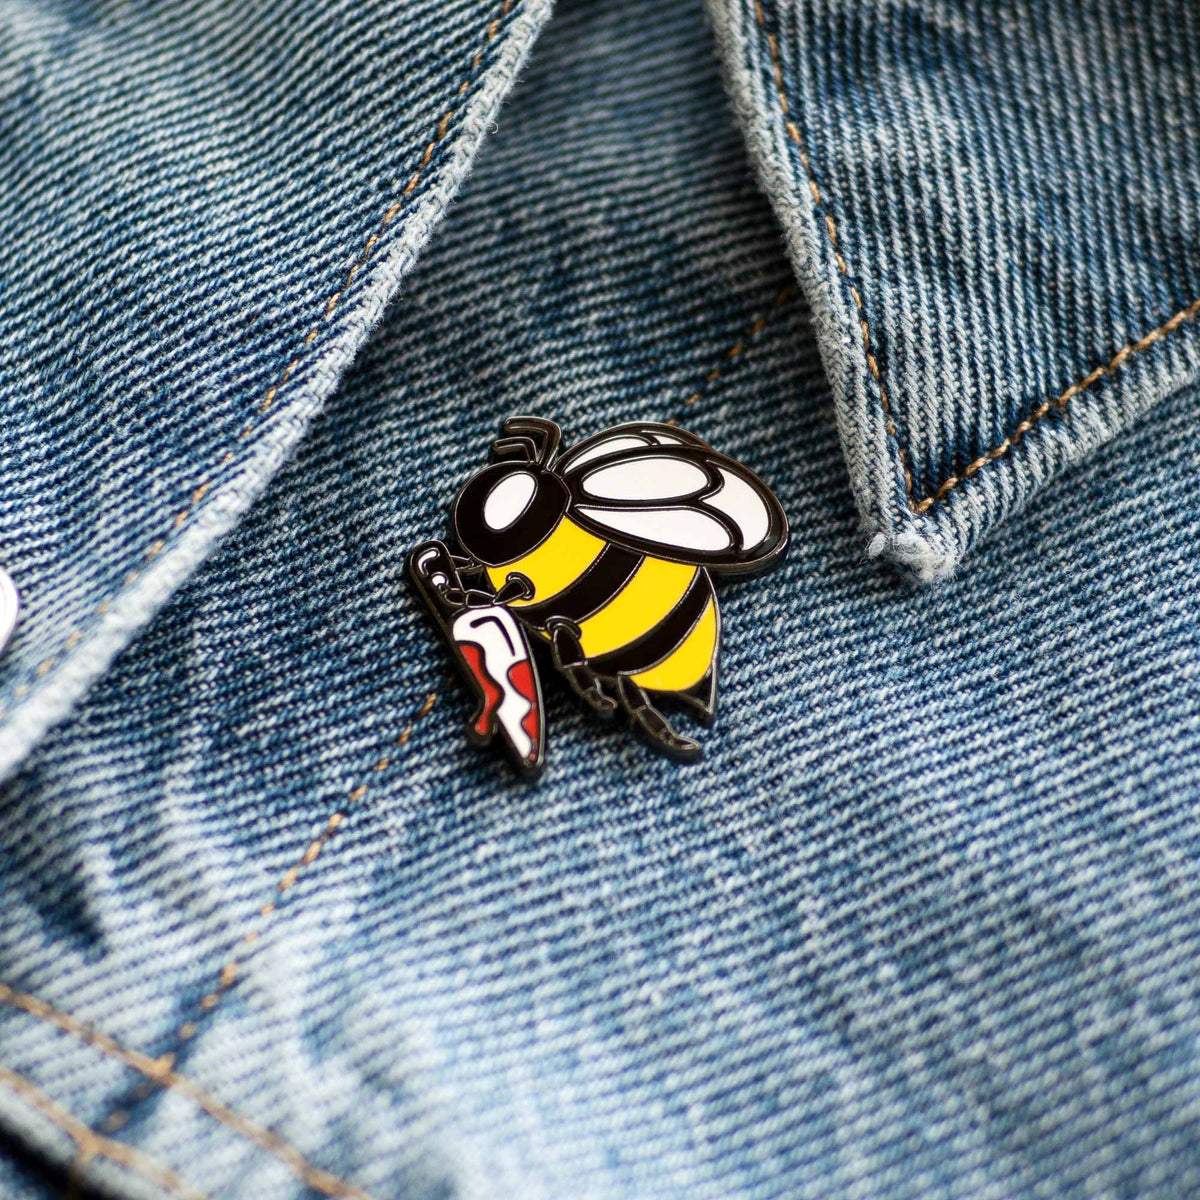 Killer Bee Holding Knife hard enamel pin on denim jacket